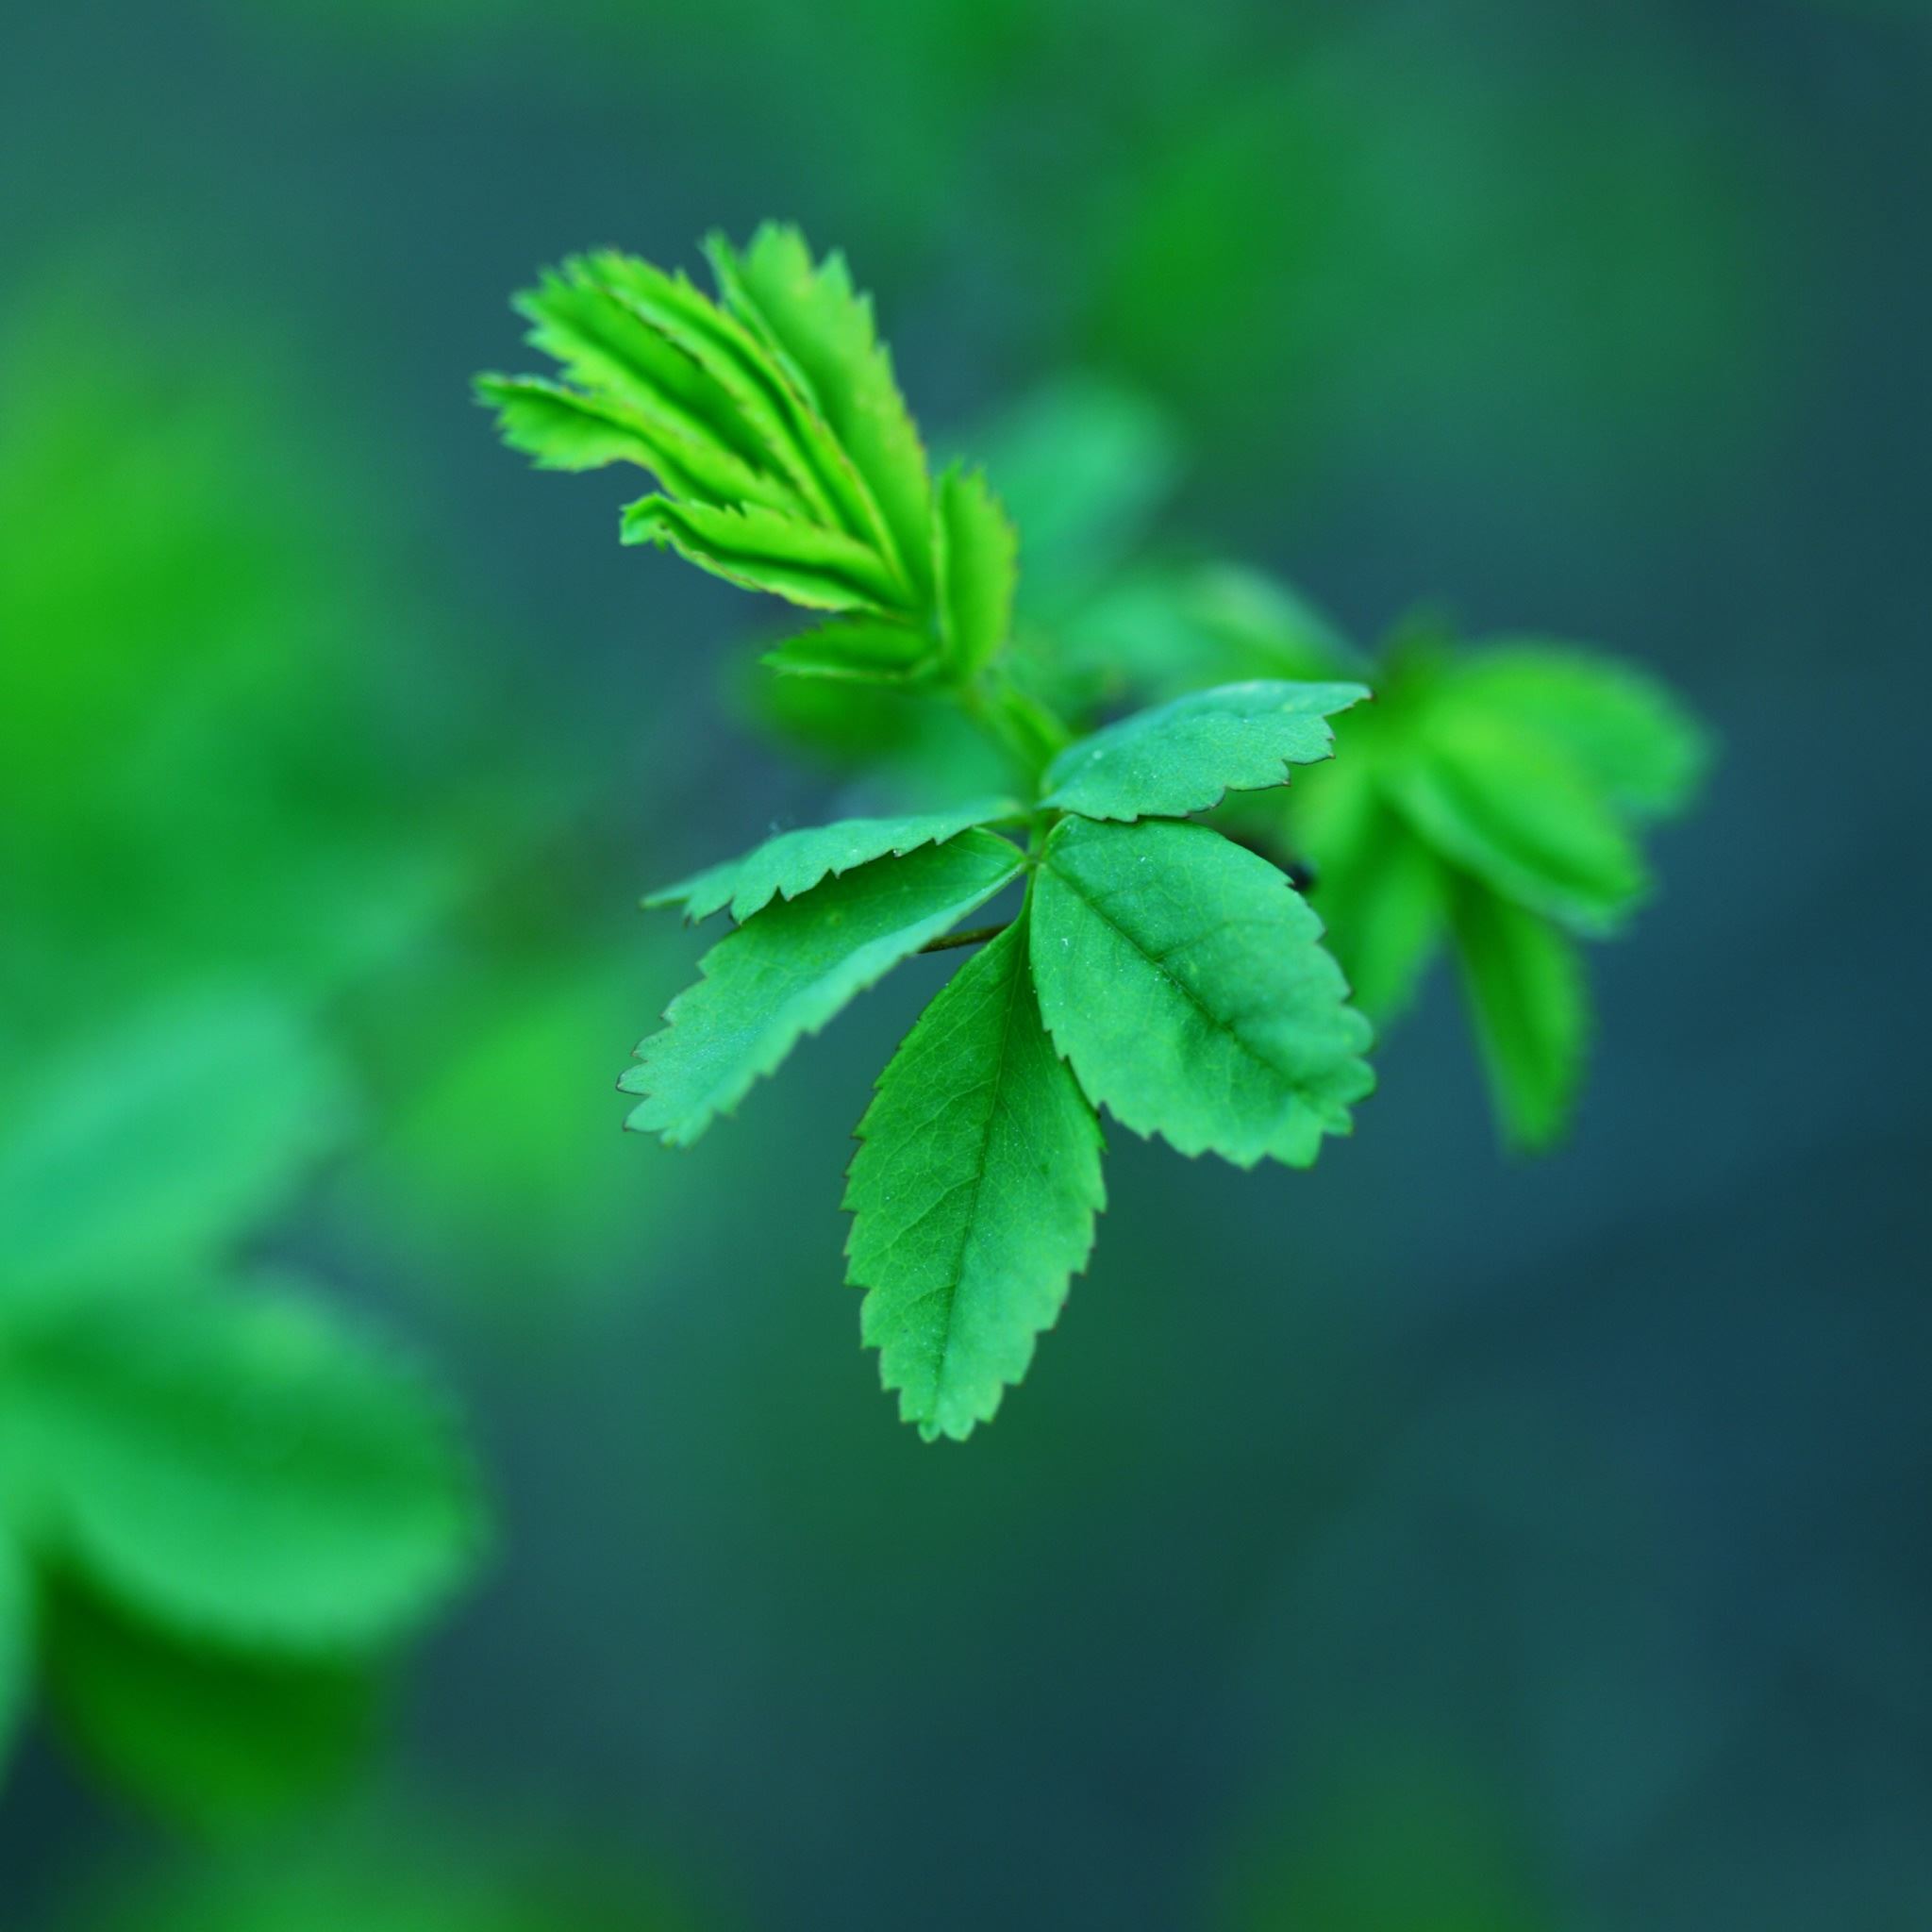 Green Spring Leaves iPad Air wallpaper 